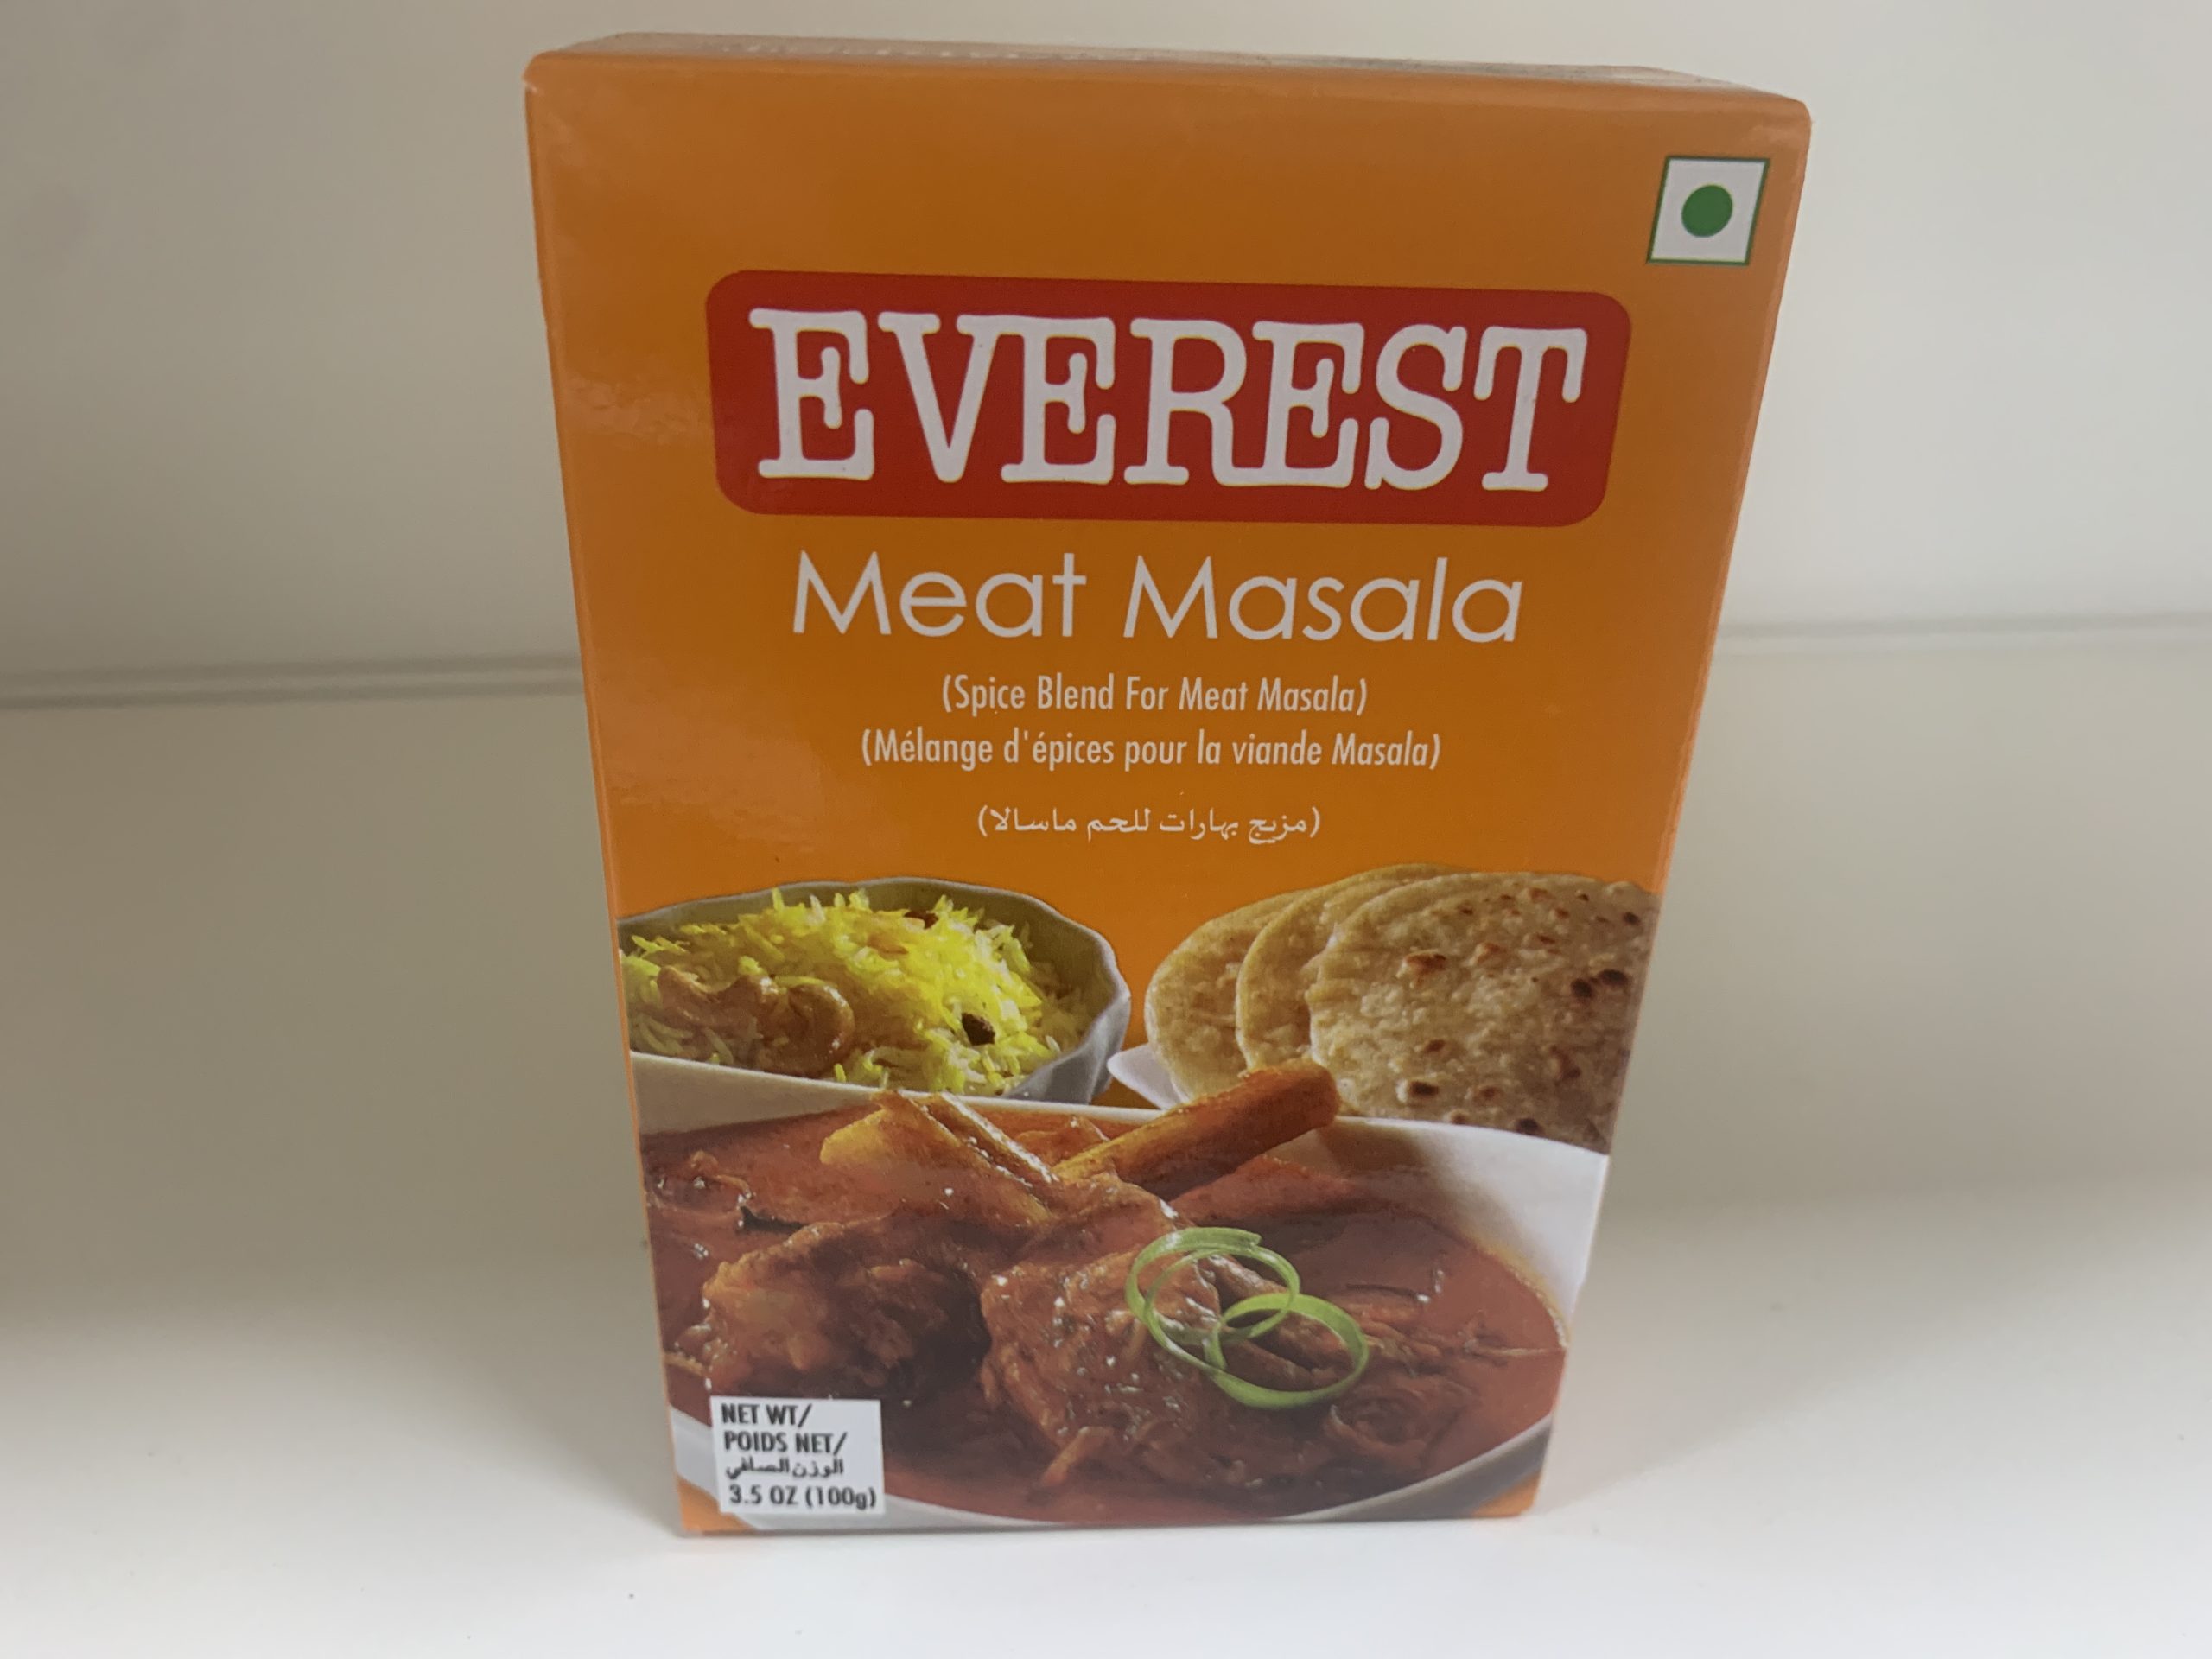 Everest meat masala